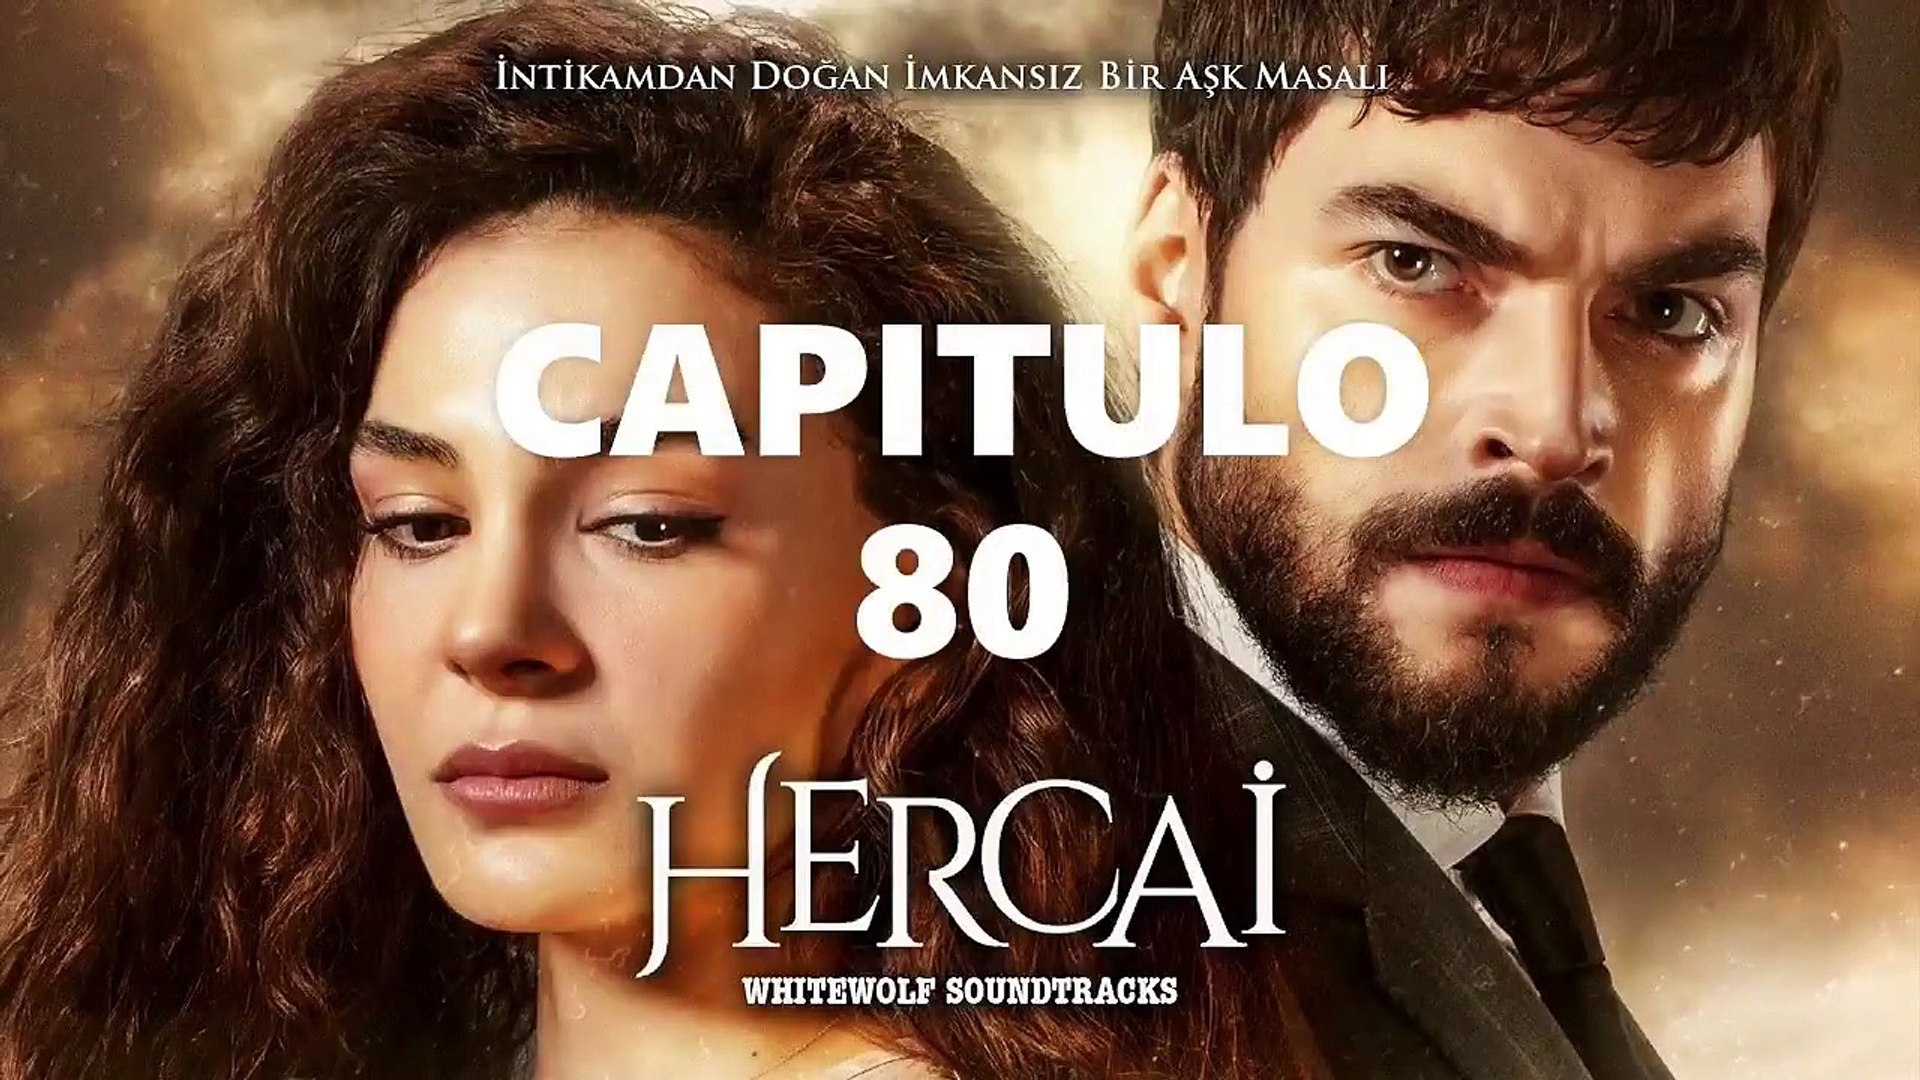 HERCAI CAPITULO 80 LATINO ❤ [2021] | NOVELA - COMPLETO HD - Vídeo  Dailymotion